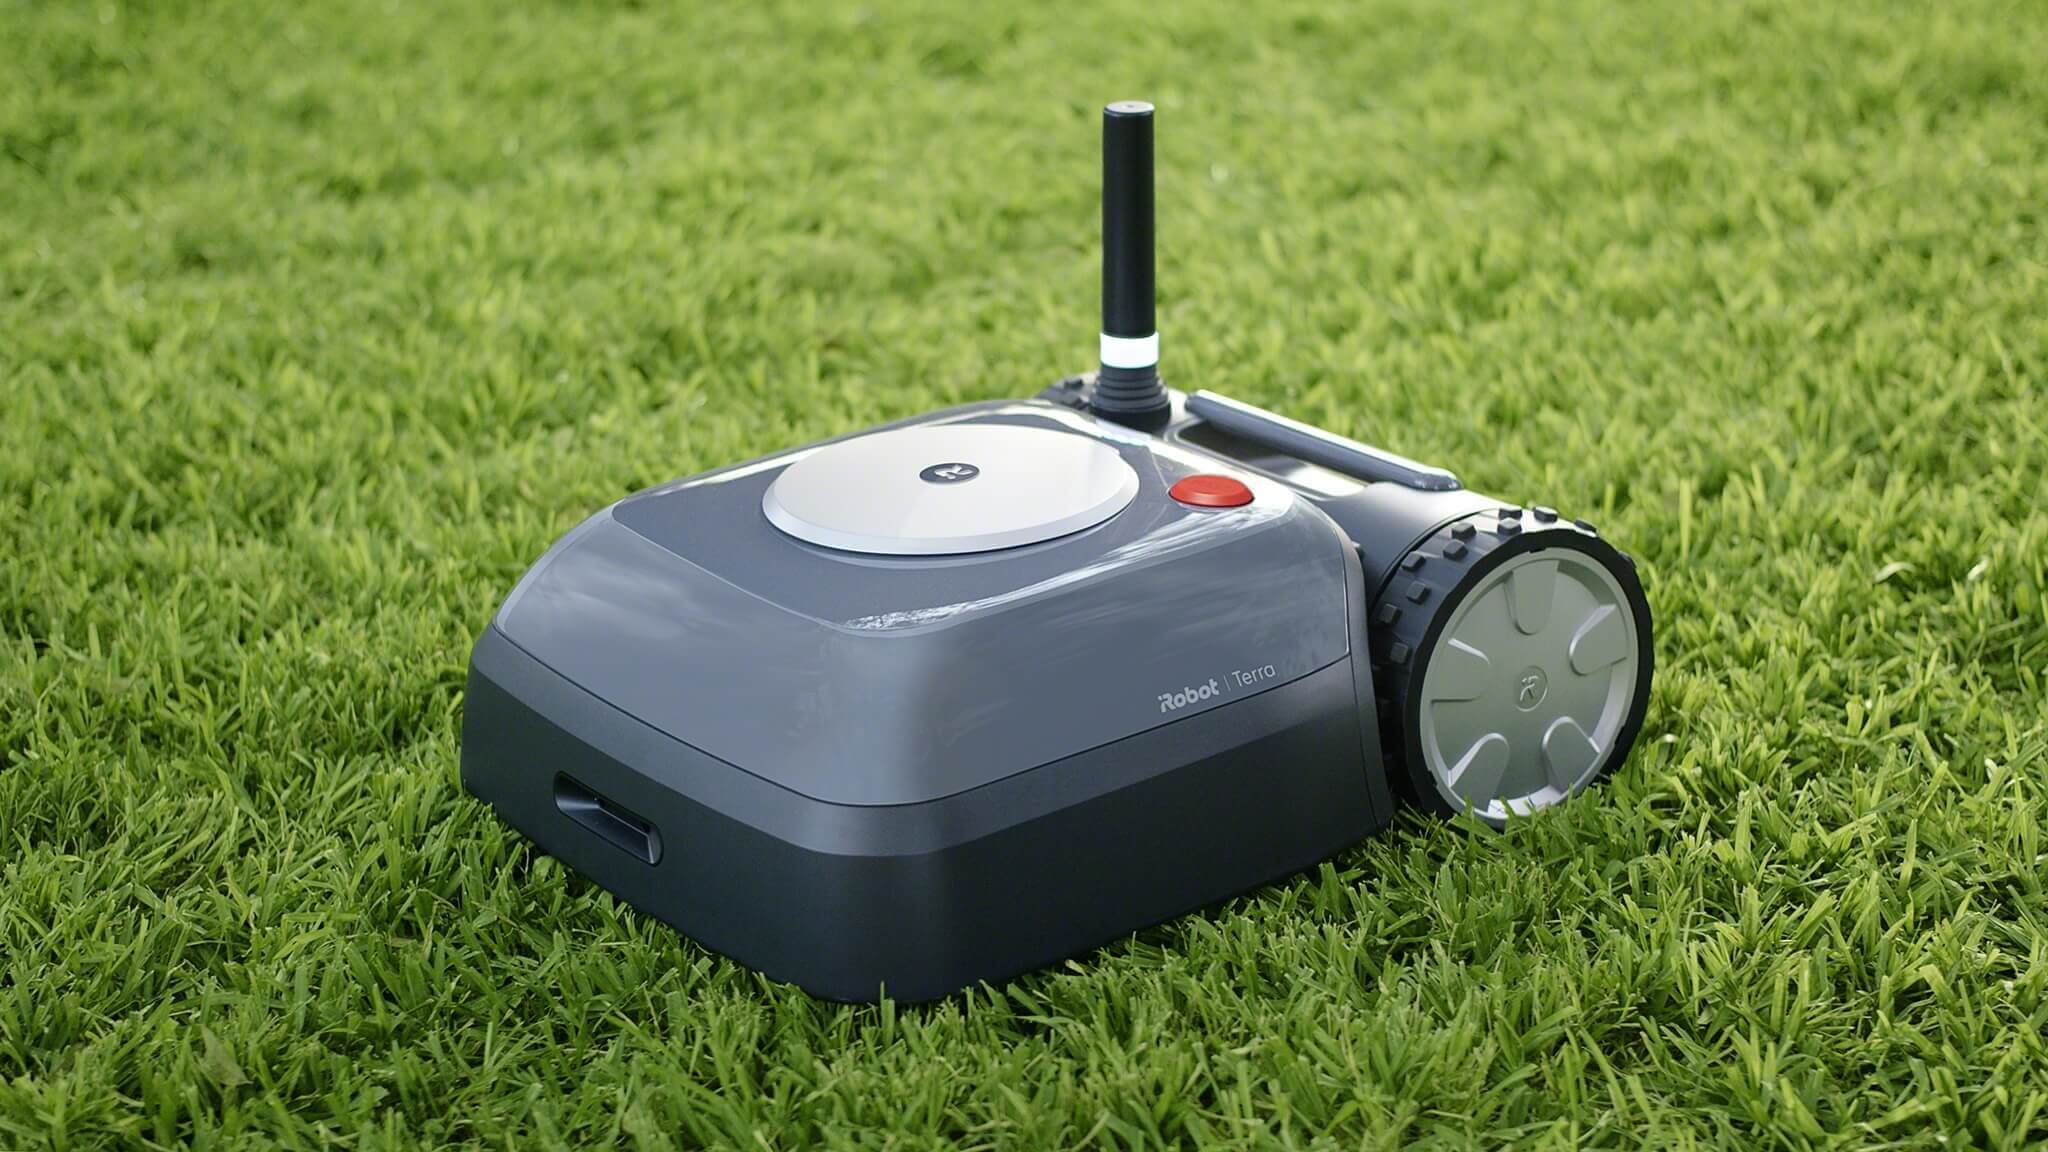 iRobot announces the Terra robotic mower launching in 2019